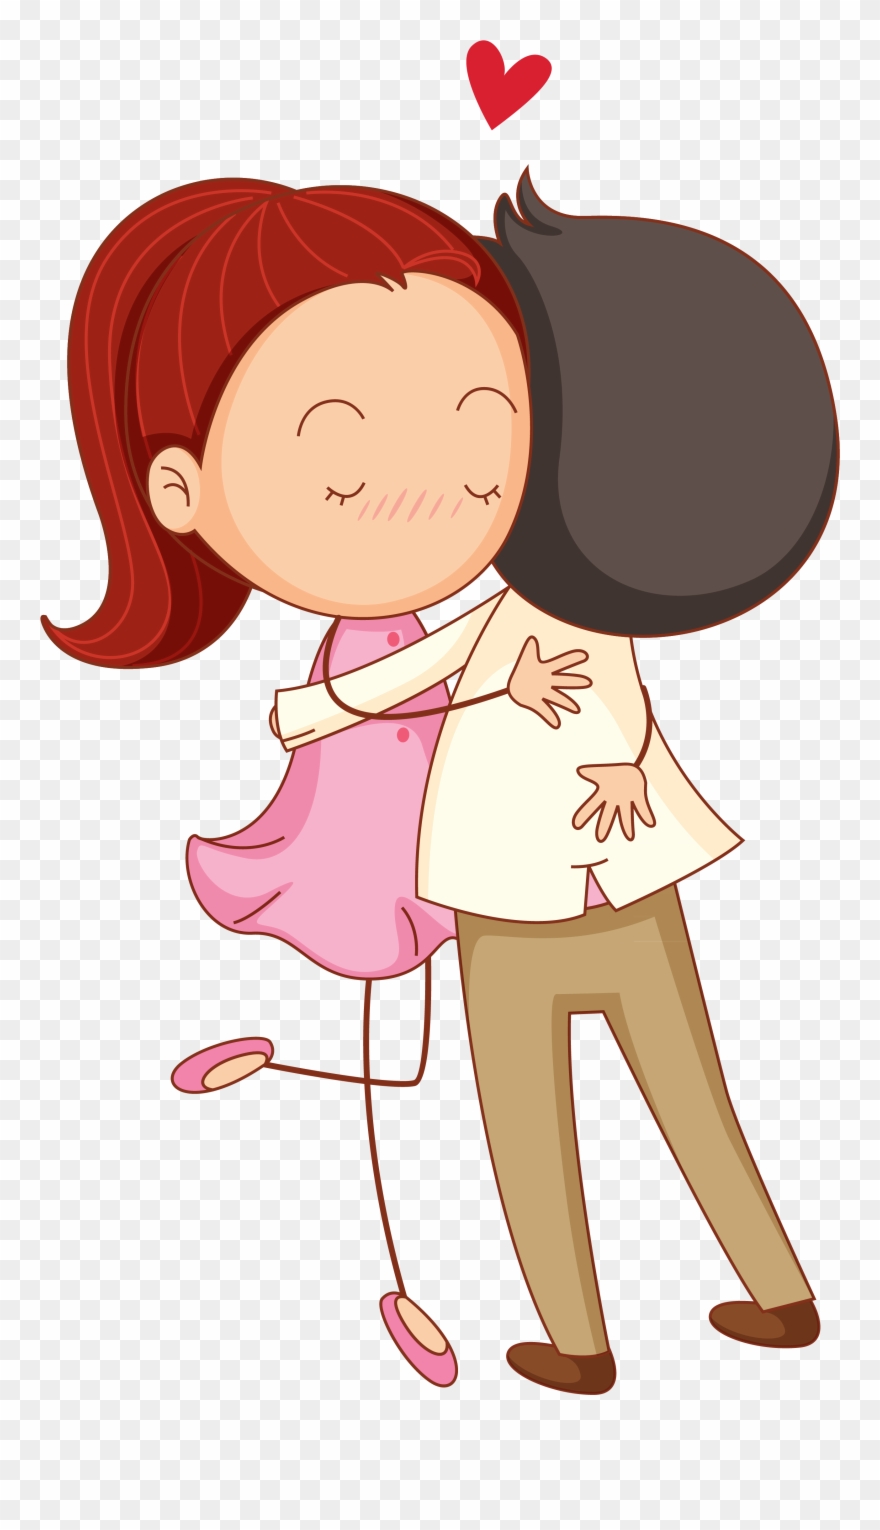 Couple clipart upset. Cartoon couples hugging boy